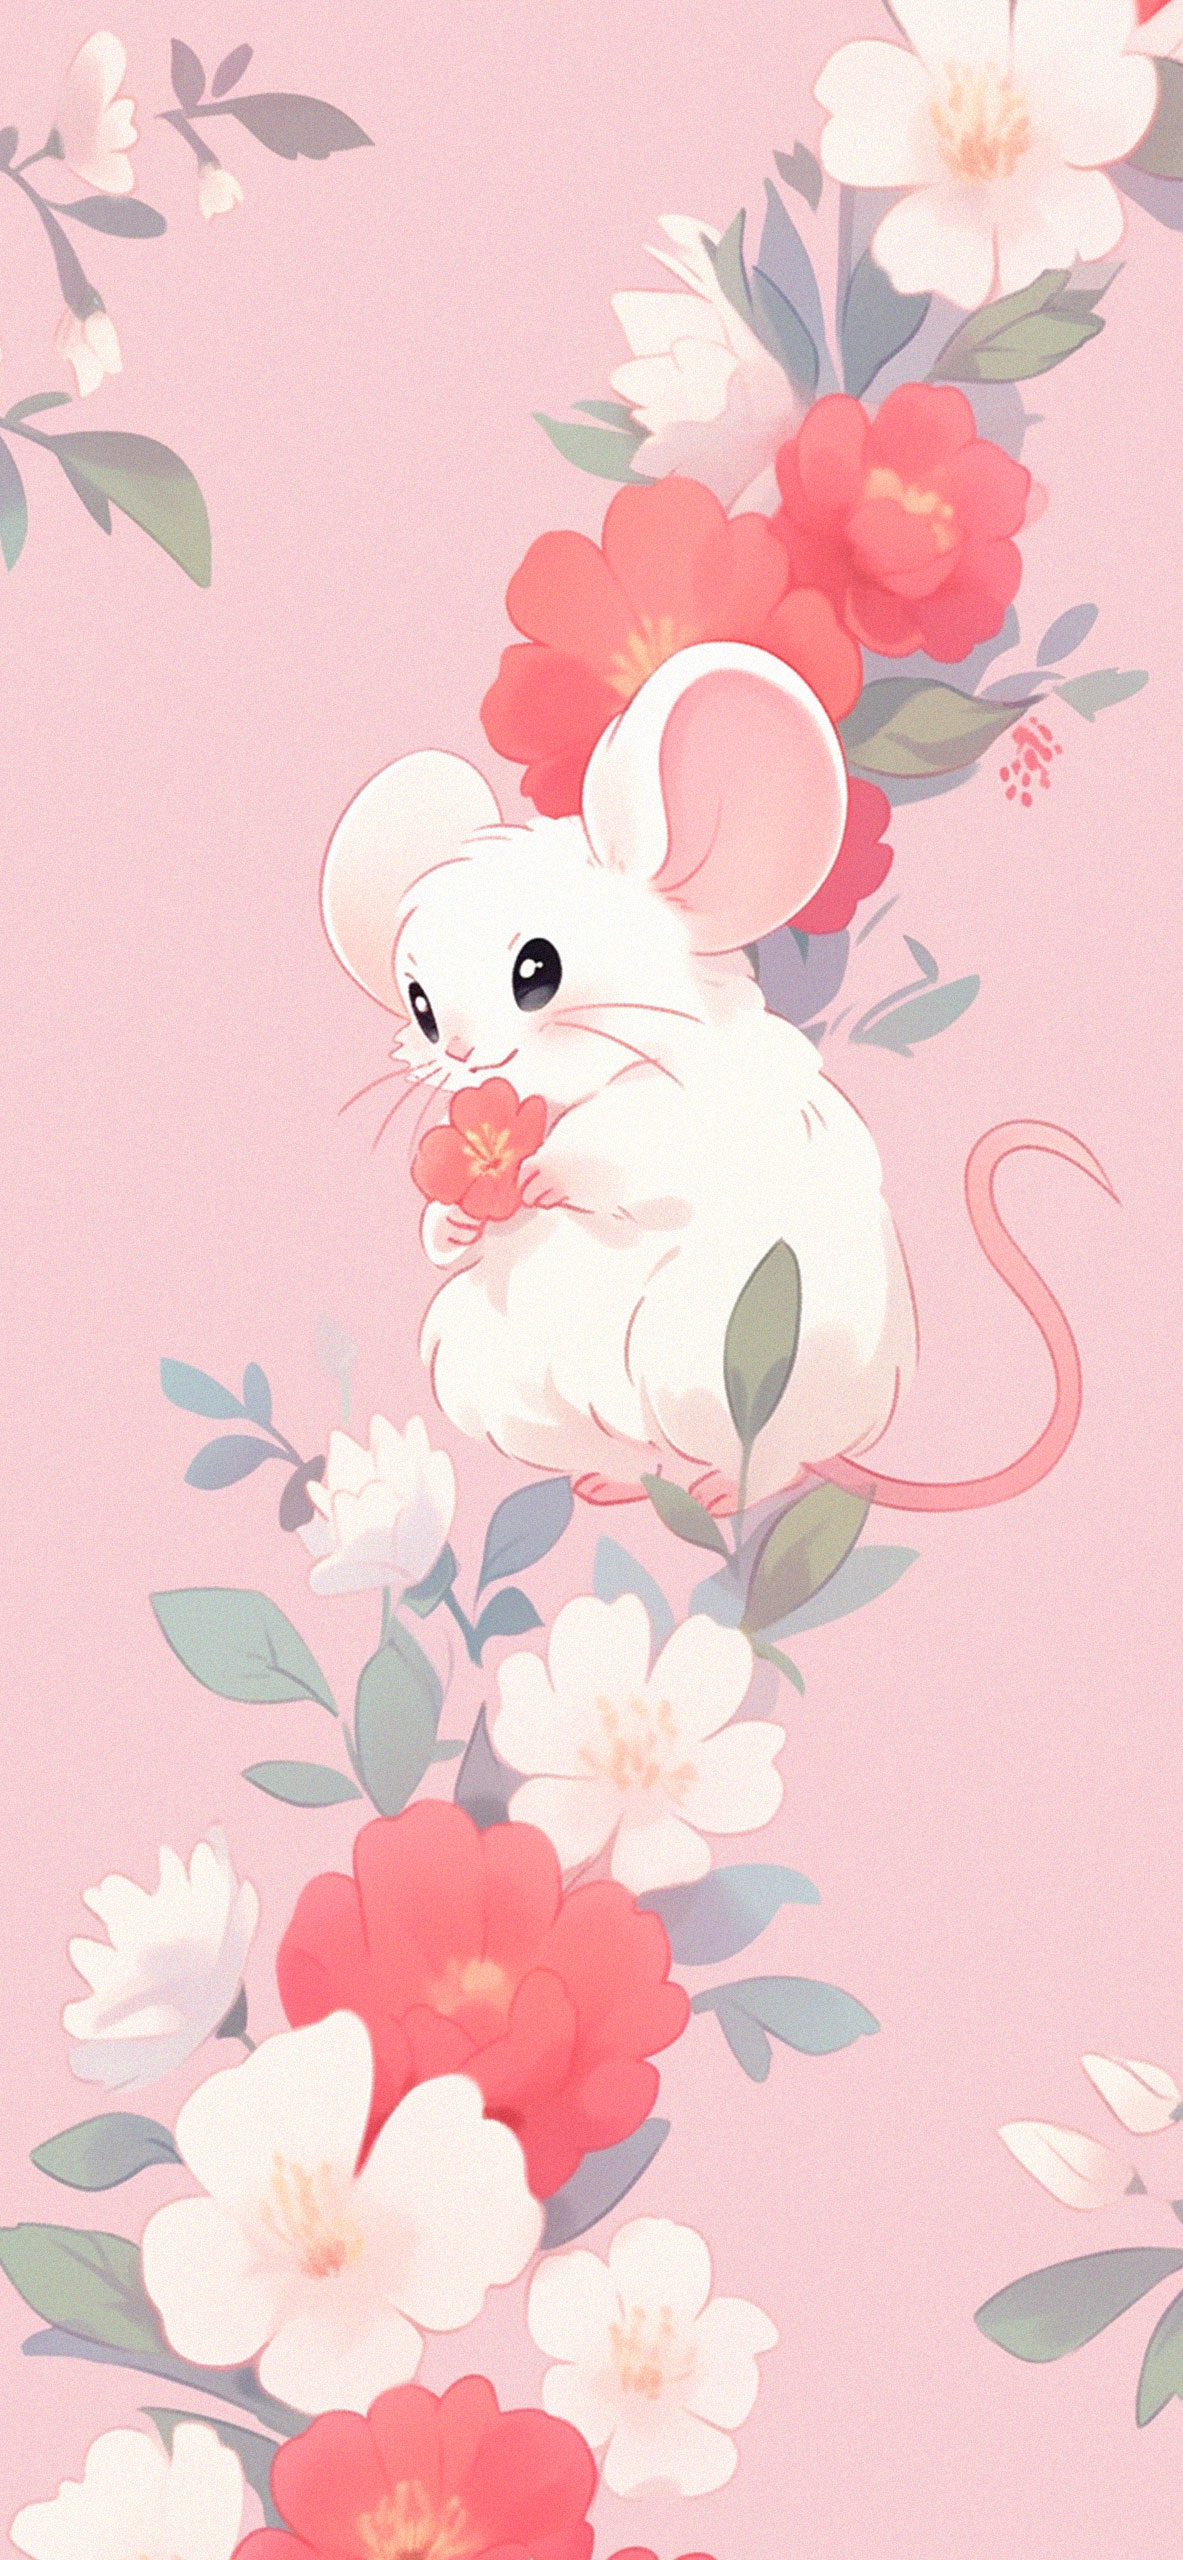 Cute mouse & flowers pink wallpaper Kawaii pink aesthetic wall